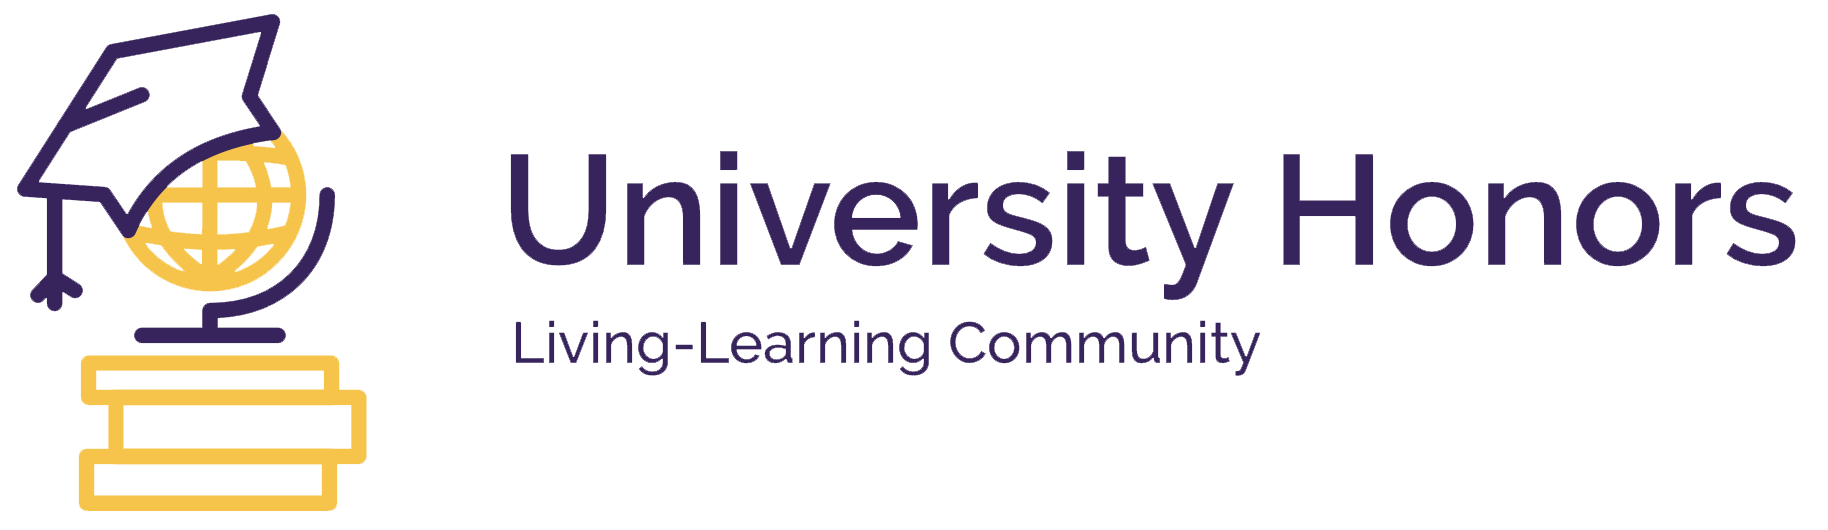 University Honors Living-Learning Community